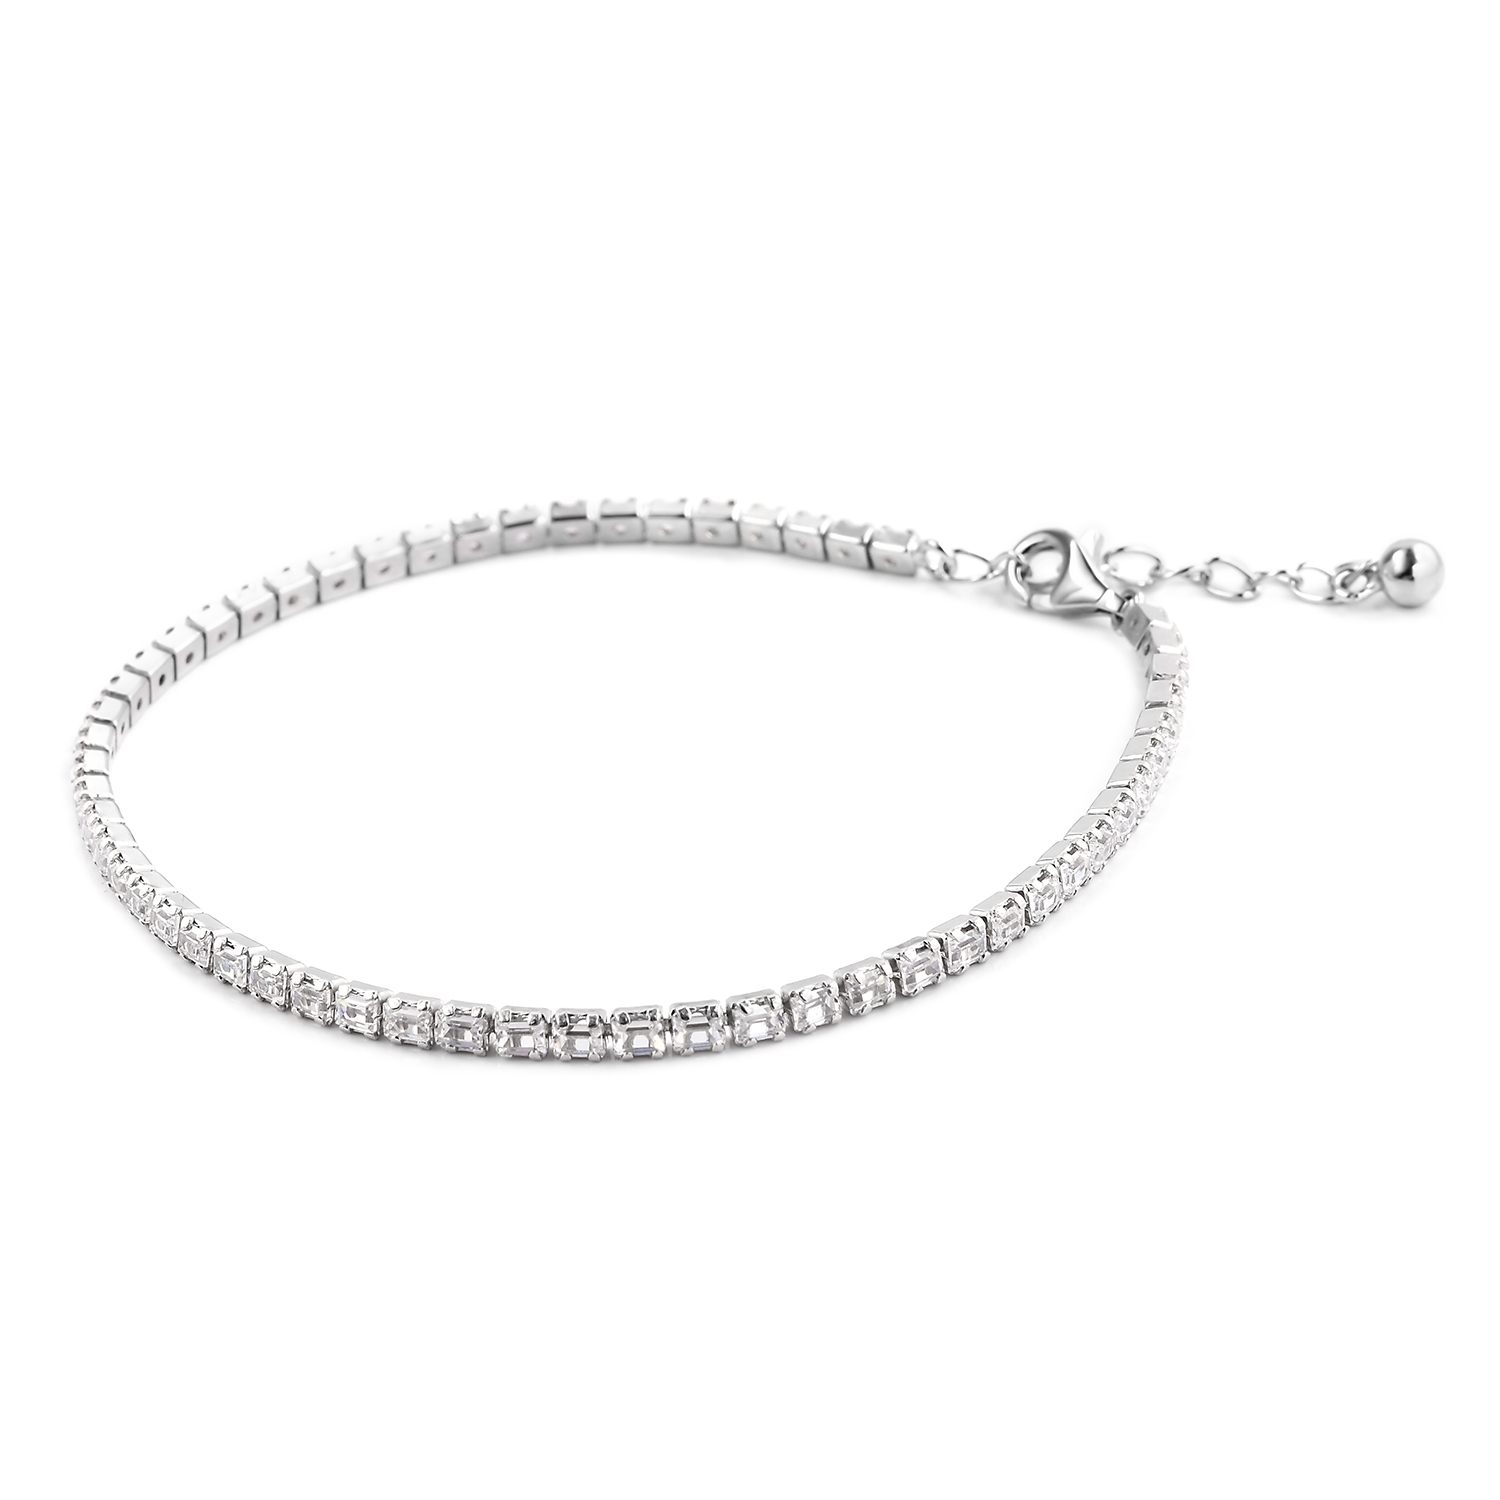 Diamond bracelet classy bracelet of silver and grey rough diamonds /& 925 silver gold plated